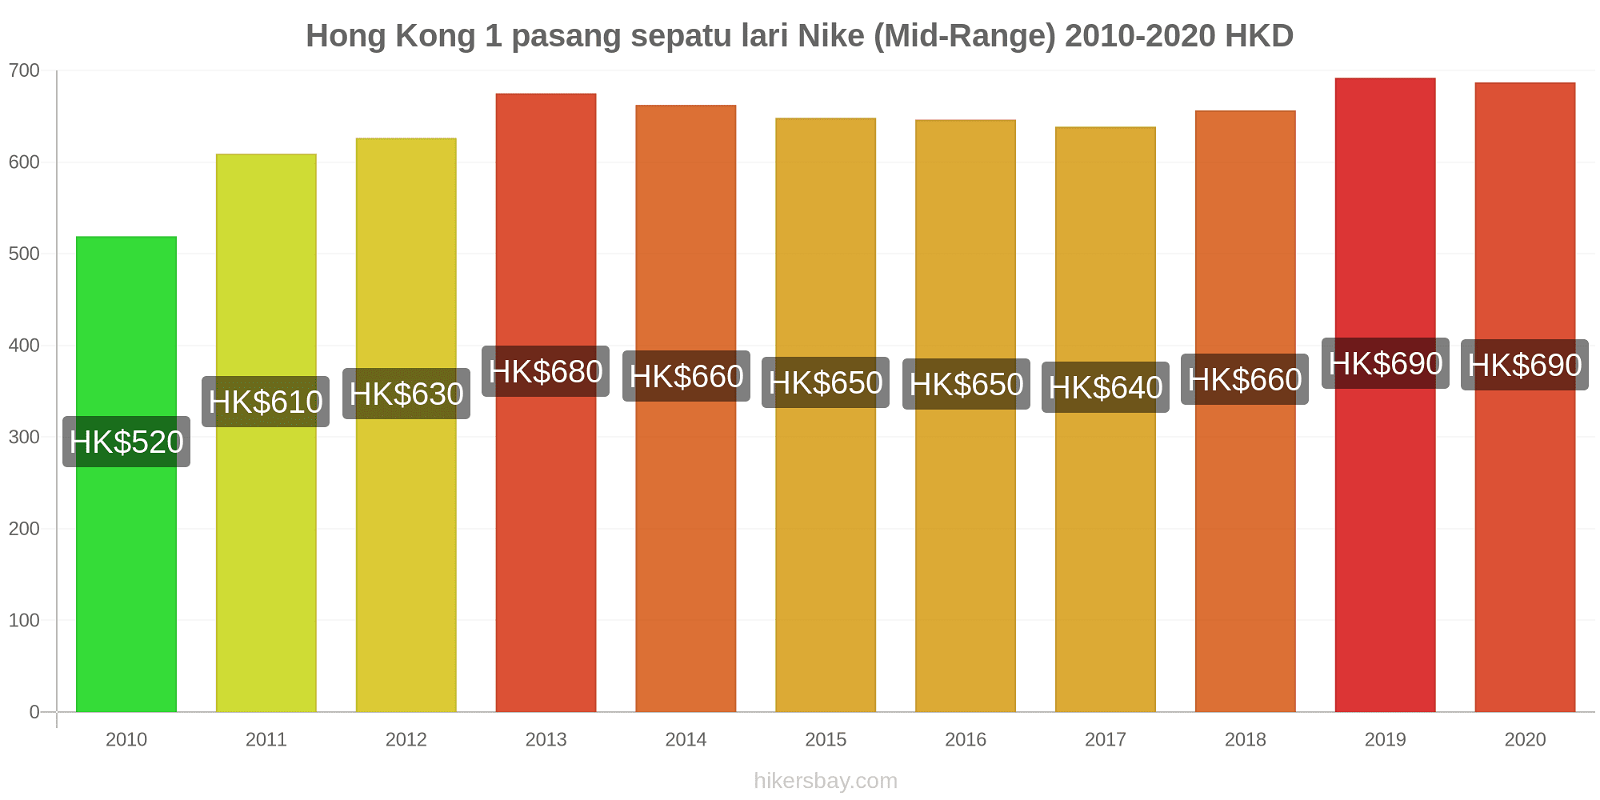 Hong Kong perubahan harga 1 pasang sepatu lari Nike (Mid-Range) hikersbay.com